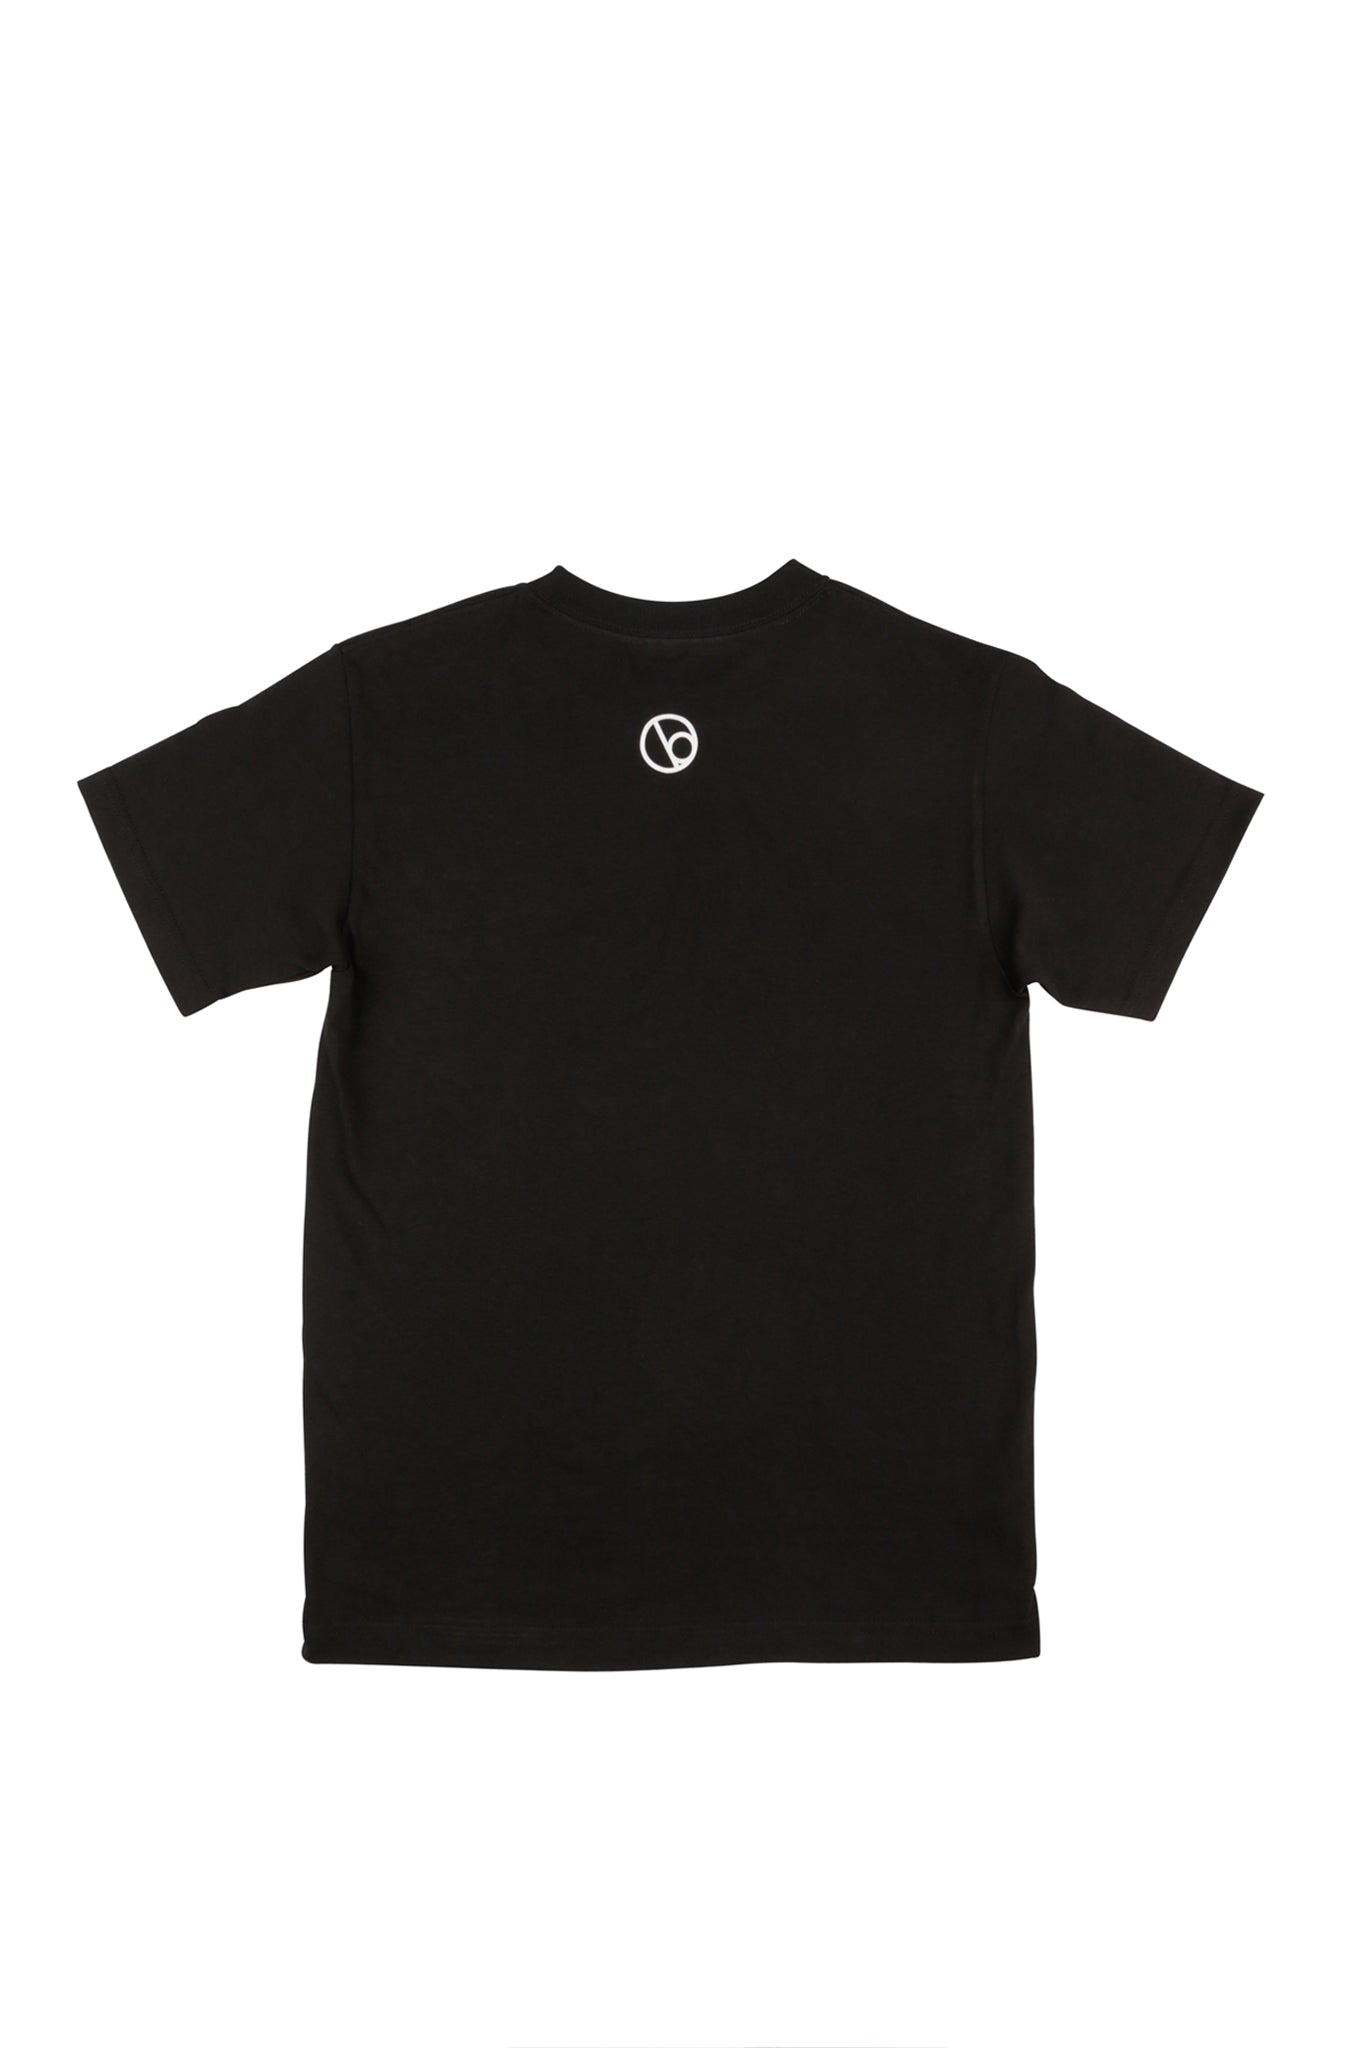 Logo T-Shirt - Black / White